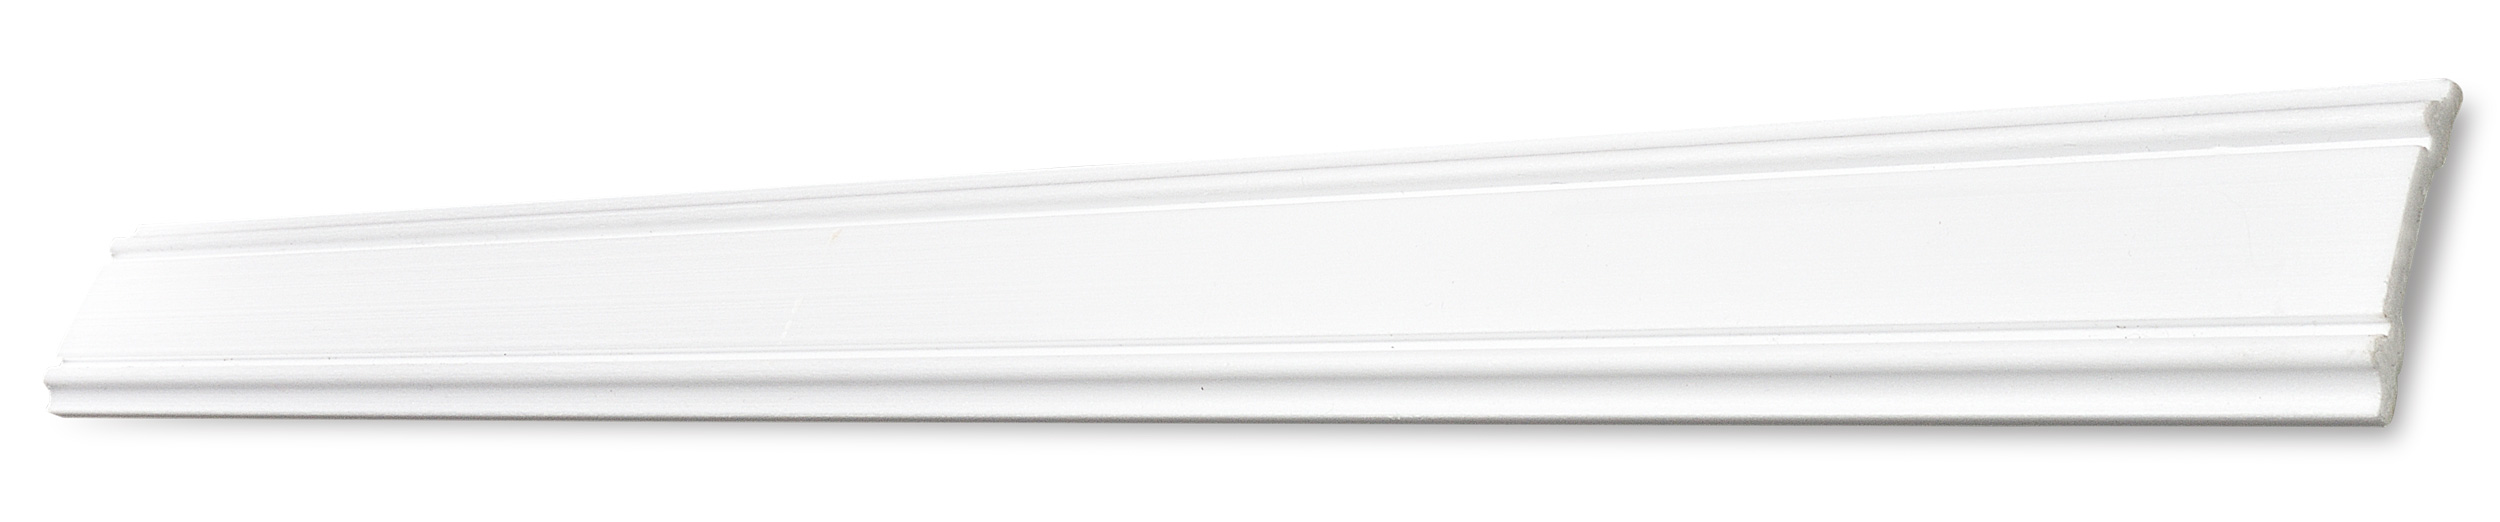 DECOSA Cimaise Marianne - polystyrène extra dur - blanc - 48 mm - longueur 2 m